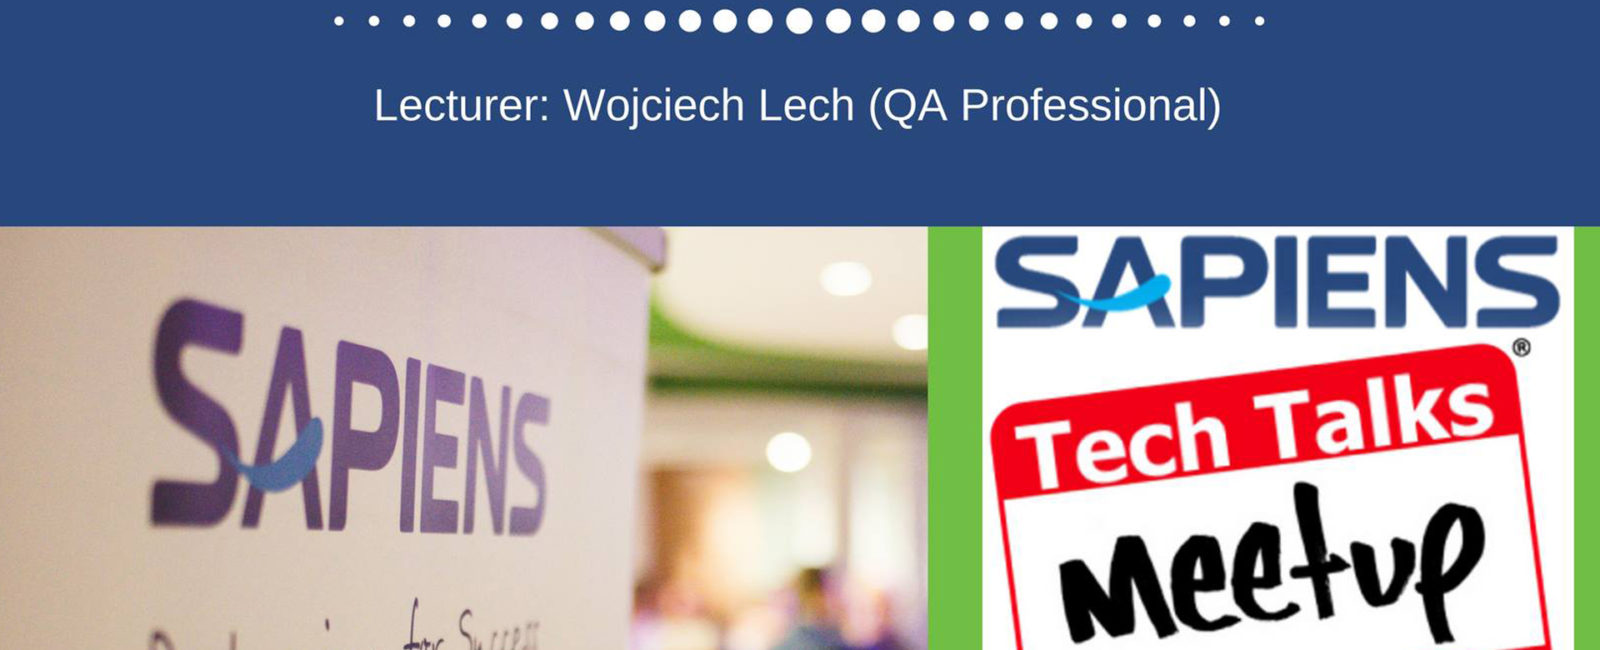 Sapiens Tech Talks 8 listopada w Katowicach